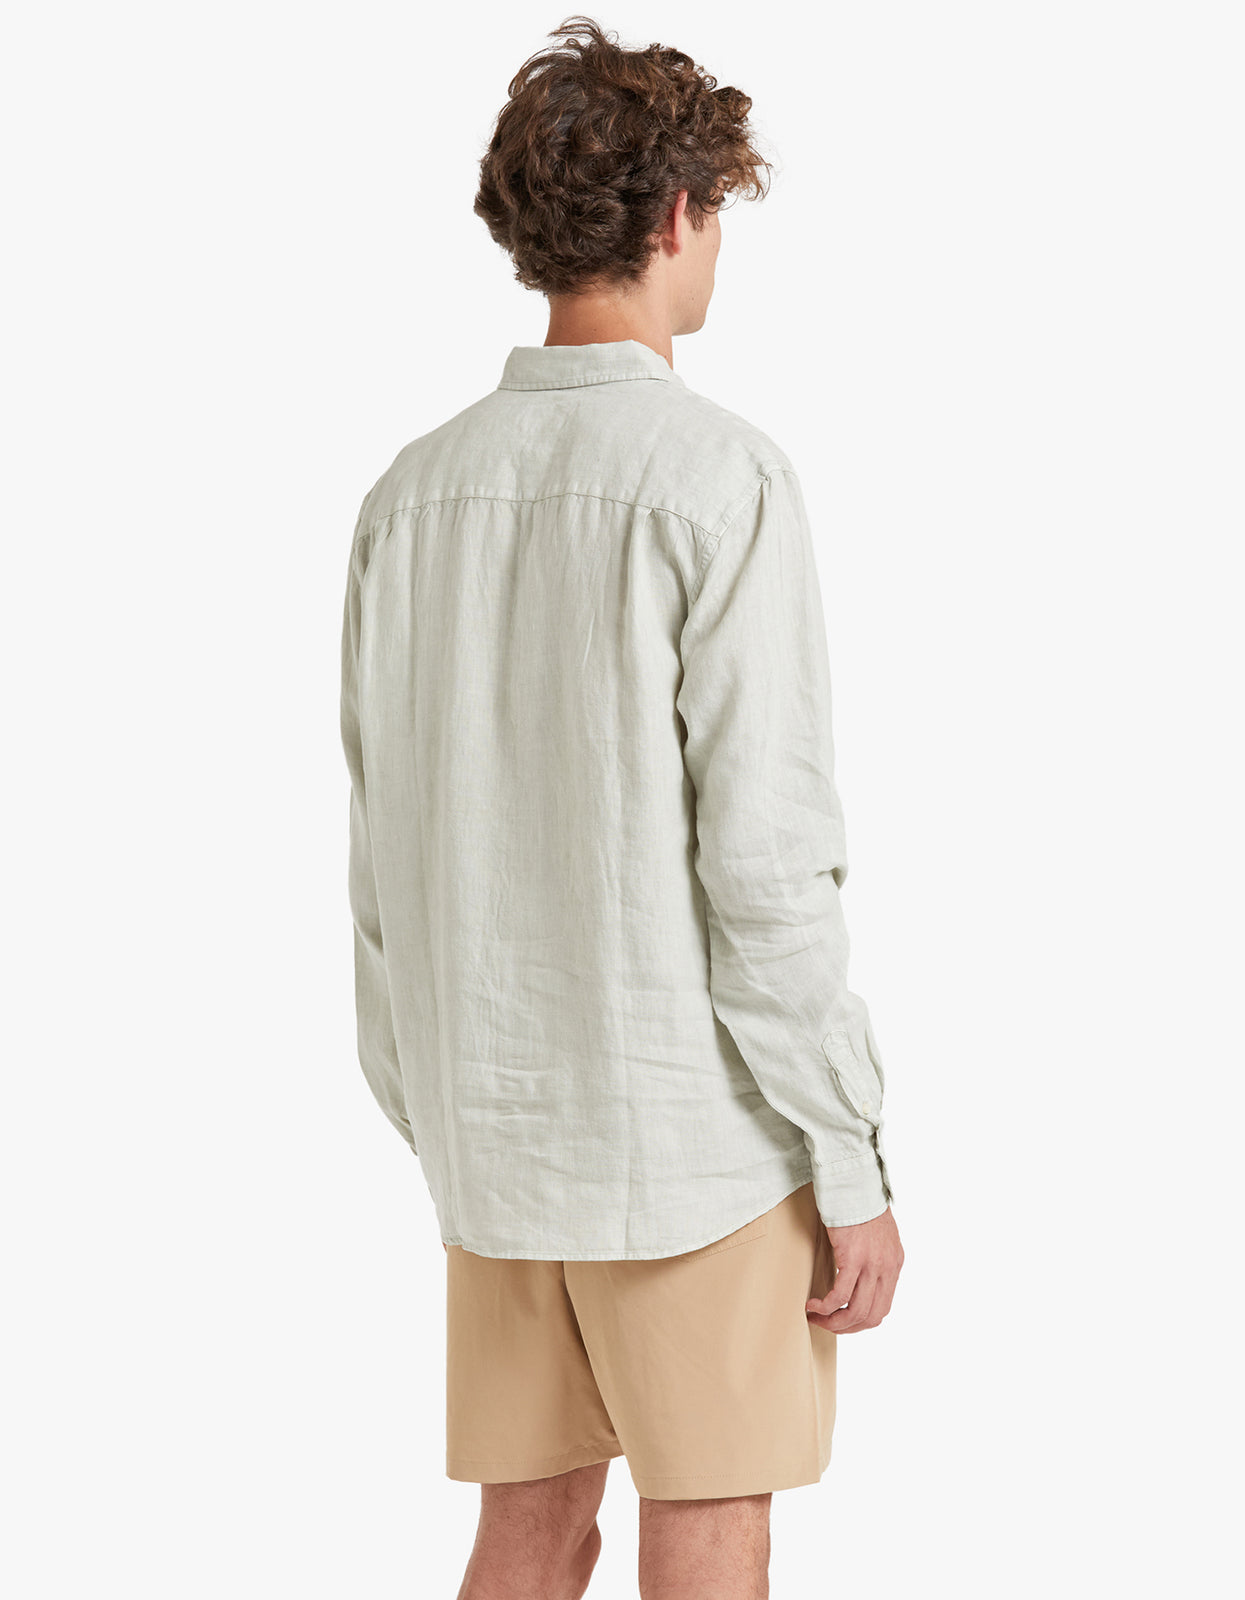 Superette | Hampton Linen Shirt - Sage Green